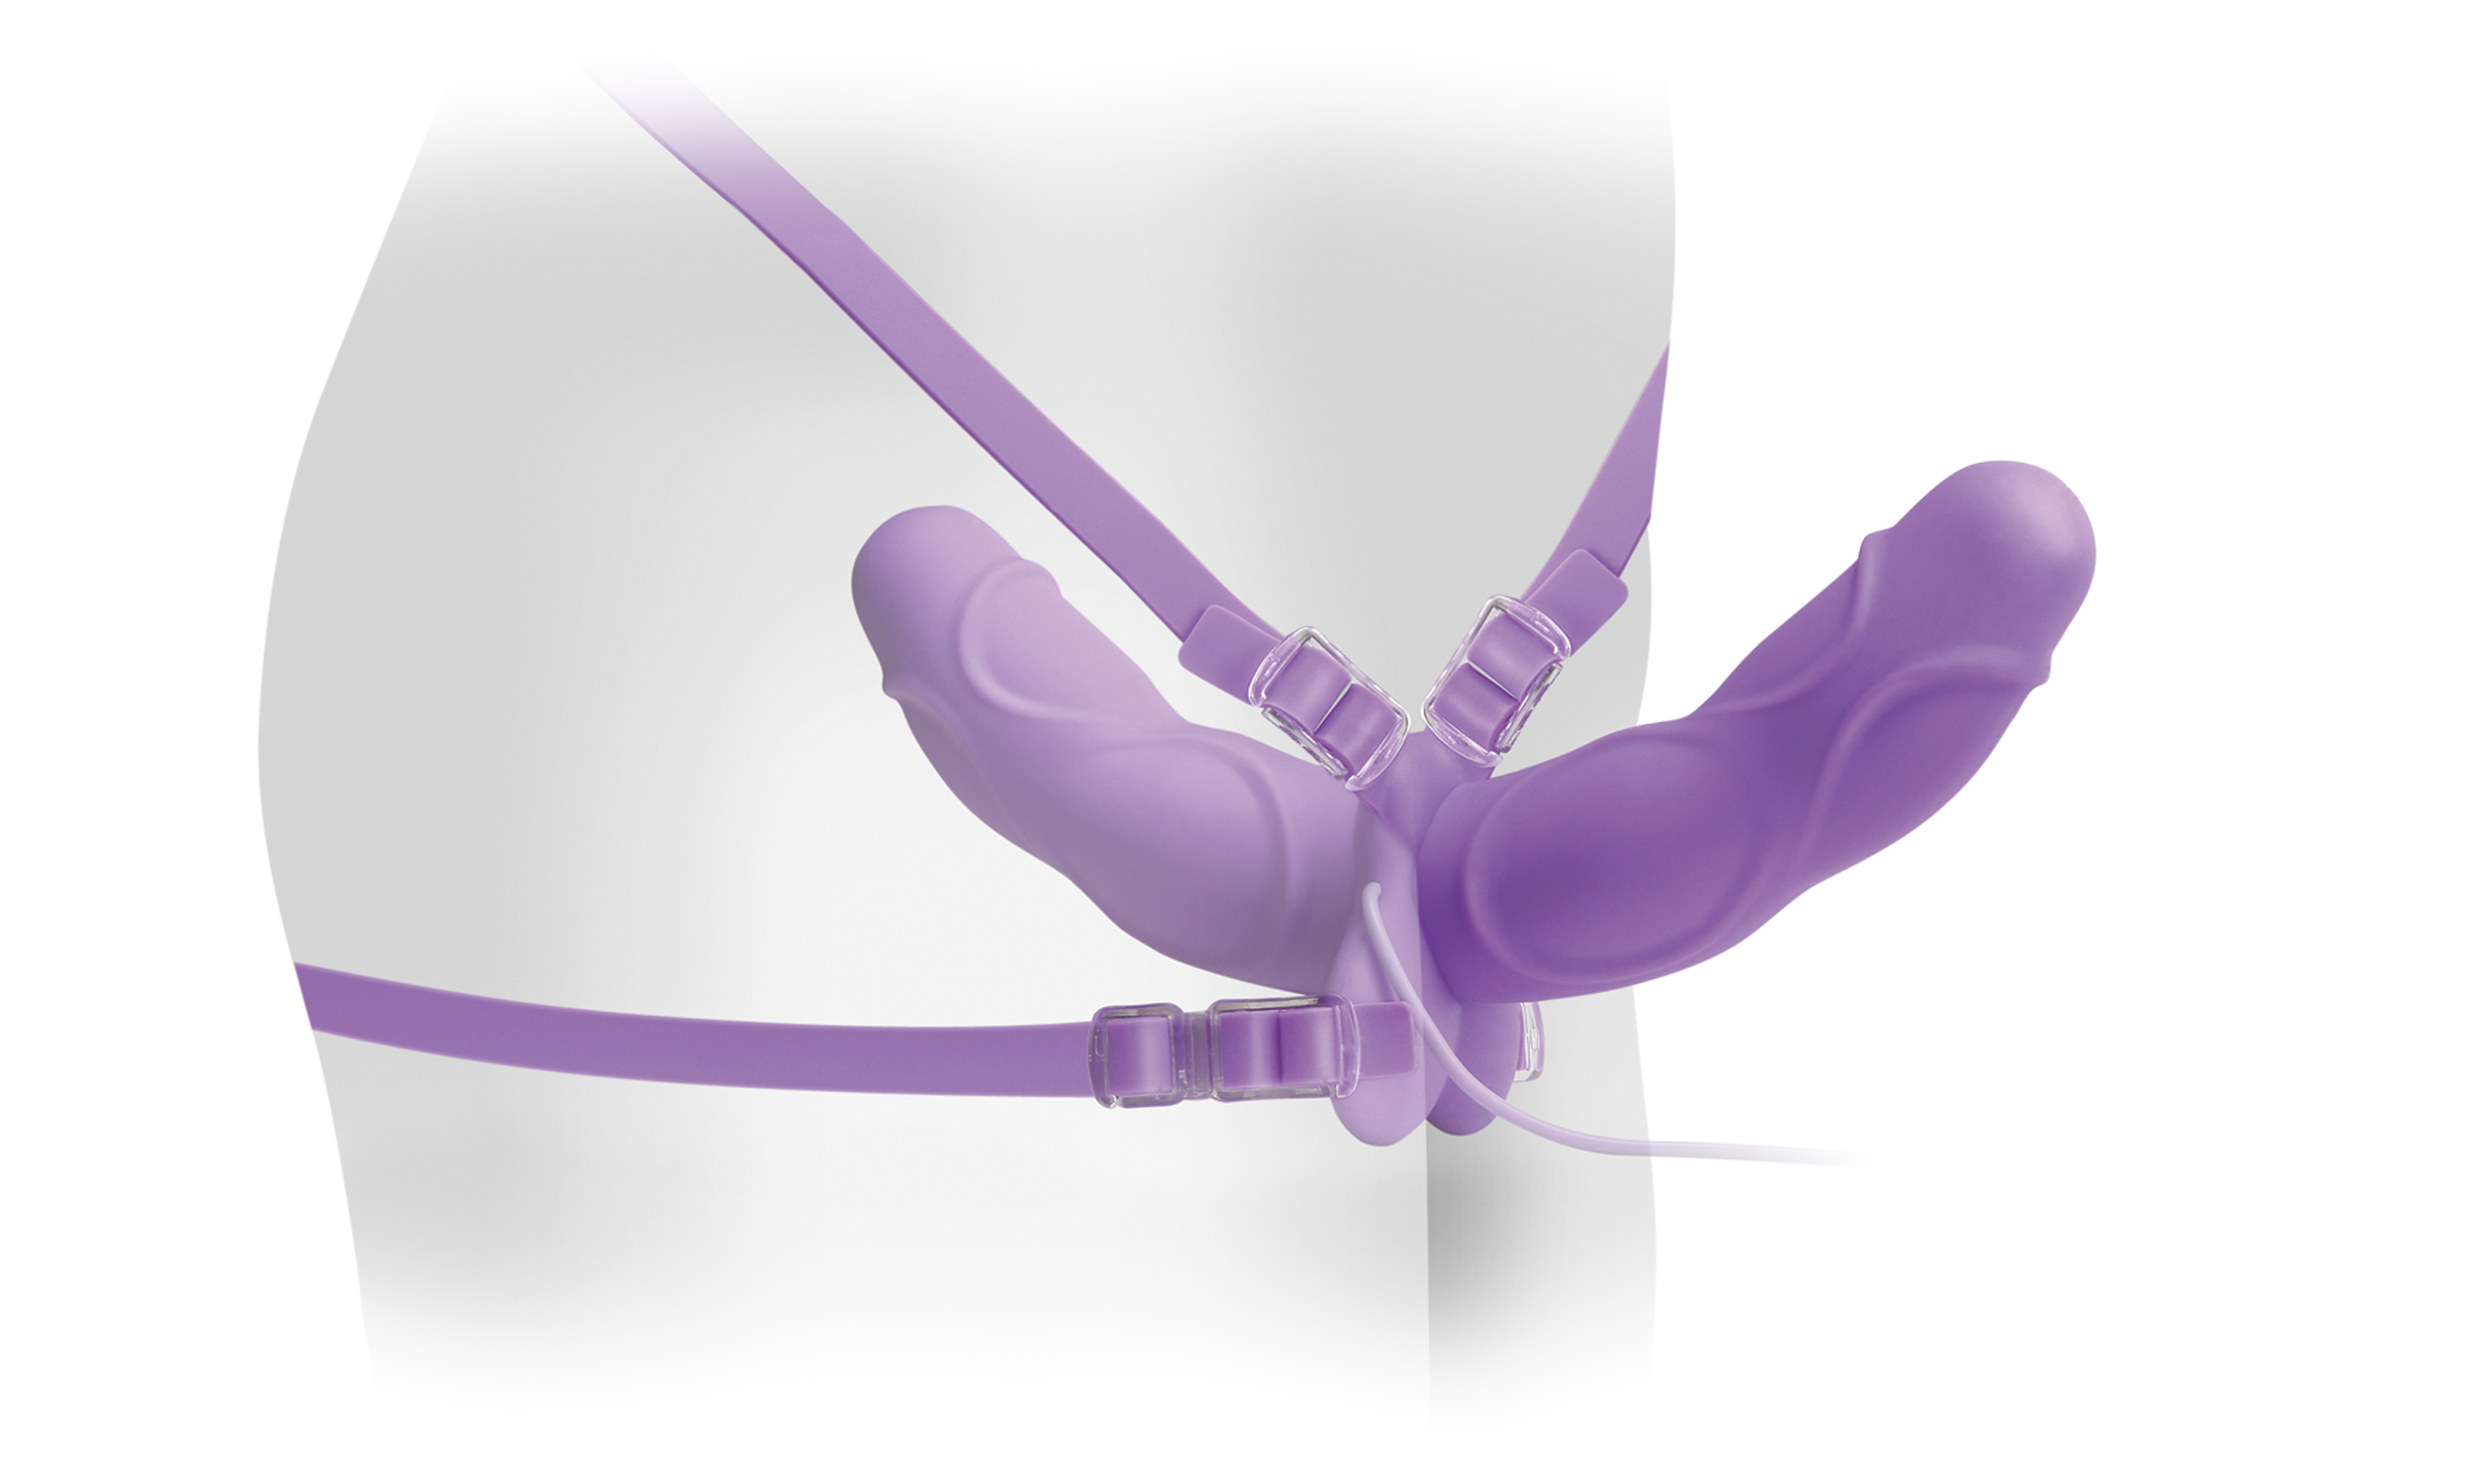 FFE Inflatable Vibrating Double Delight Strap-On - Purple Двойной страпон с вибрацией 25 см